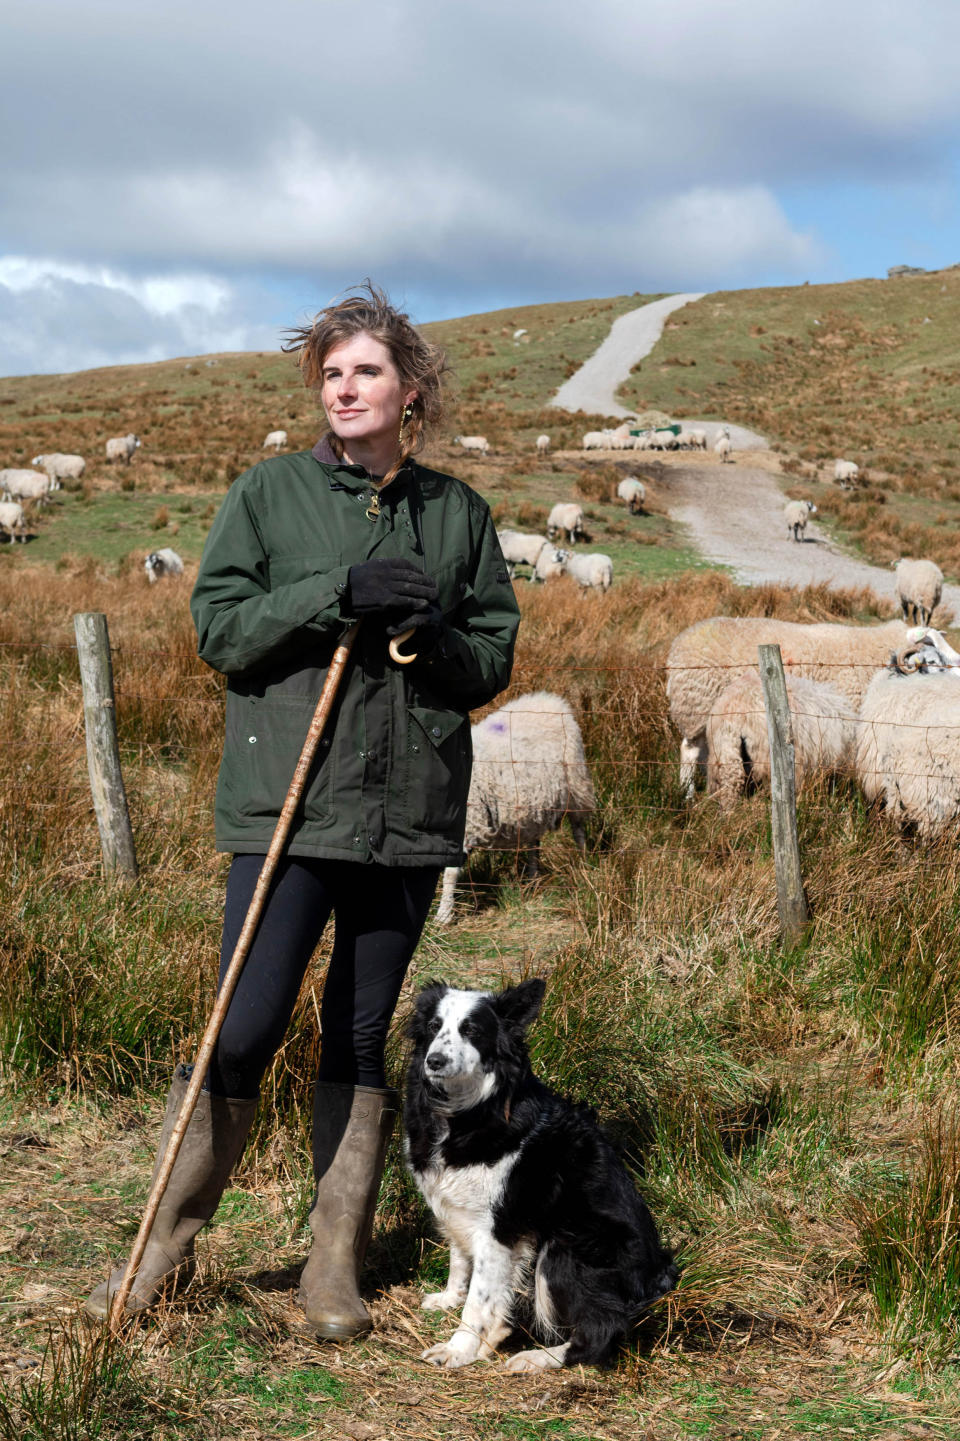 Yorkshire Shepherdess, Amanda Owen with her sheep dog on the farm